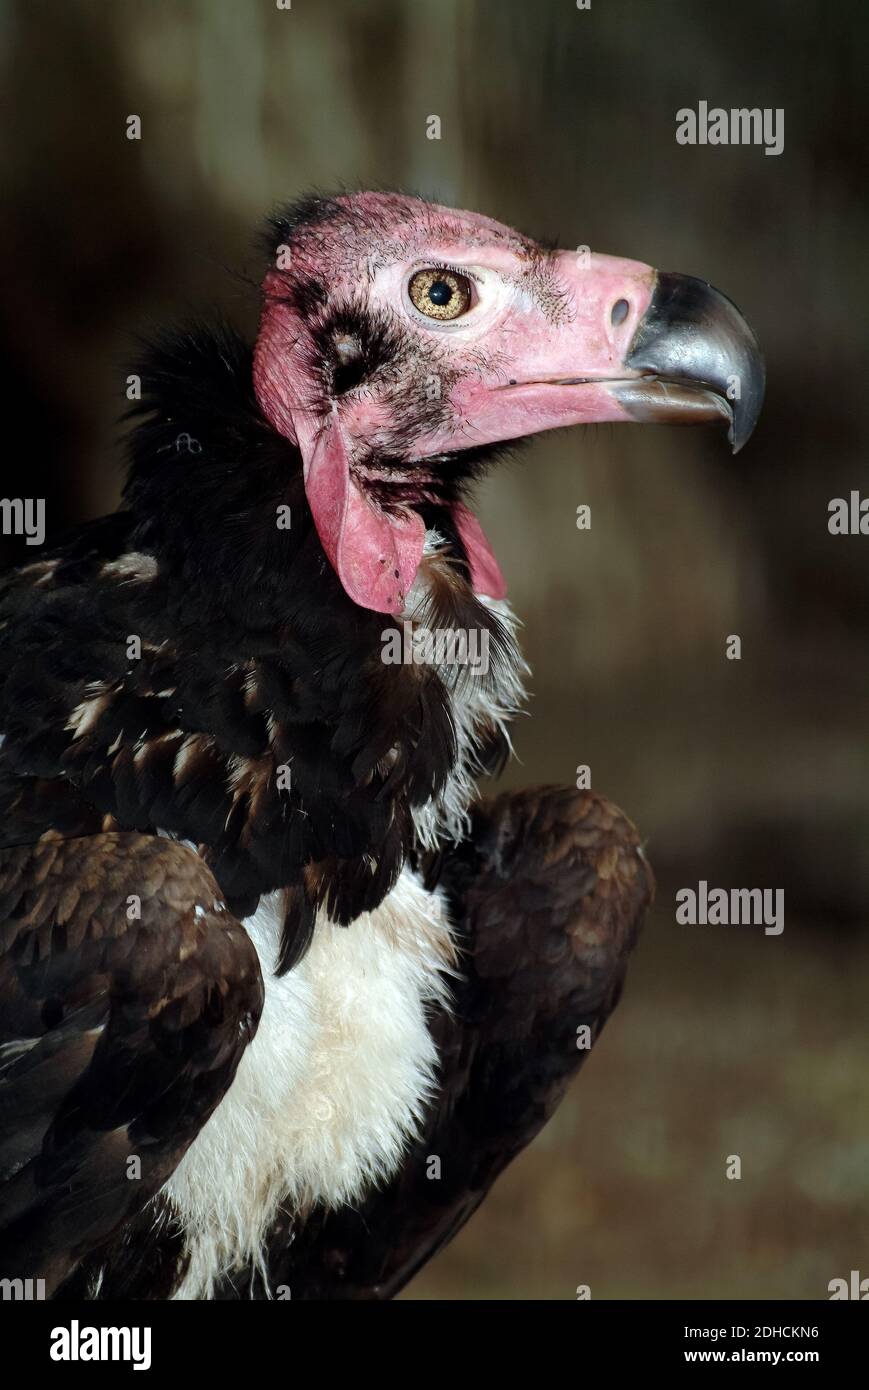 Red-headed vulture, Asian king vulture, Indian black vulture, Kahlkopfgeier, Sarcogyps calvus, pirosfejű keselyű, Critically Endangered Stock Photo